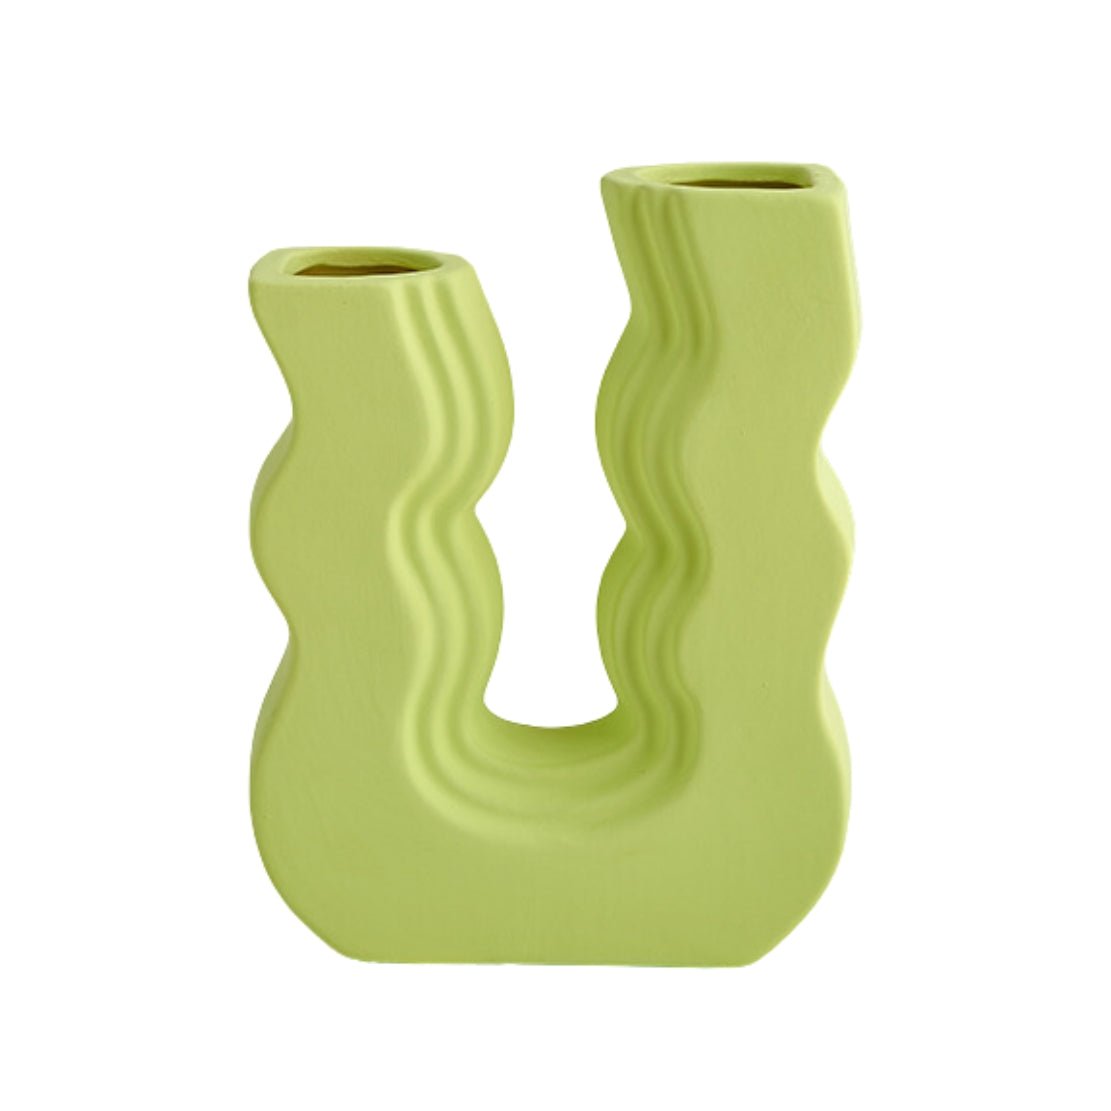 Green, ceramic, wiggle U shaped vase